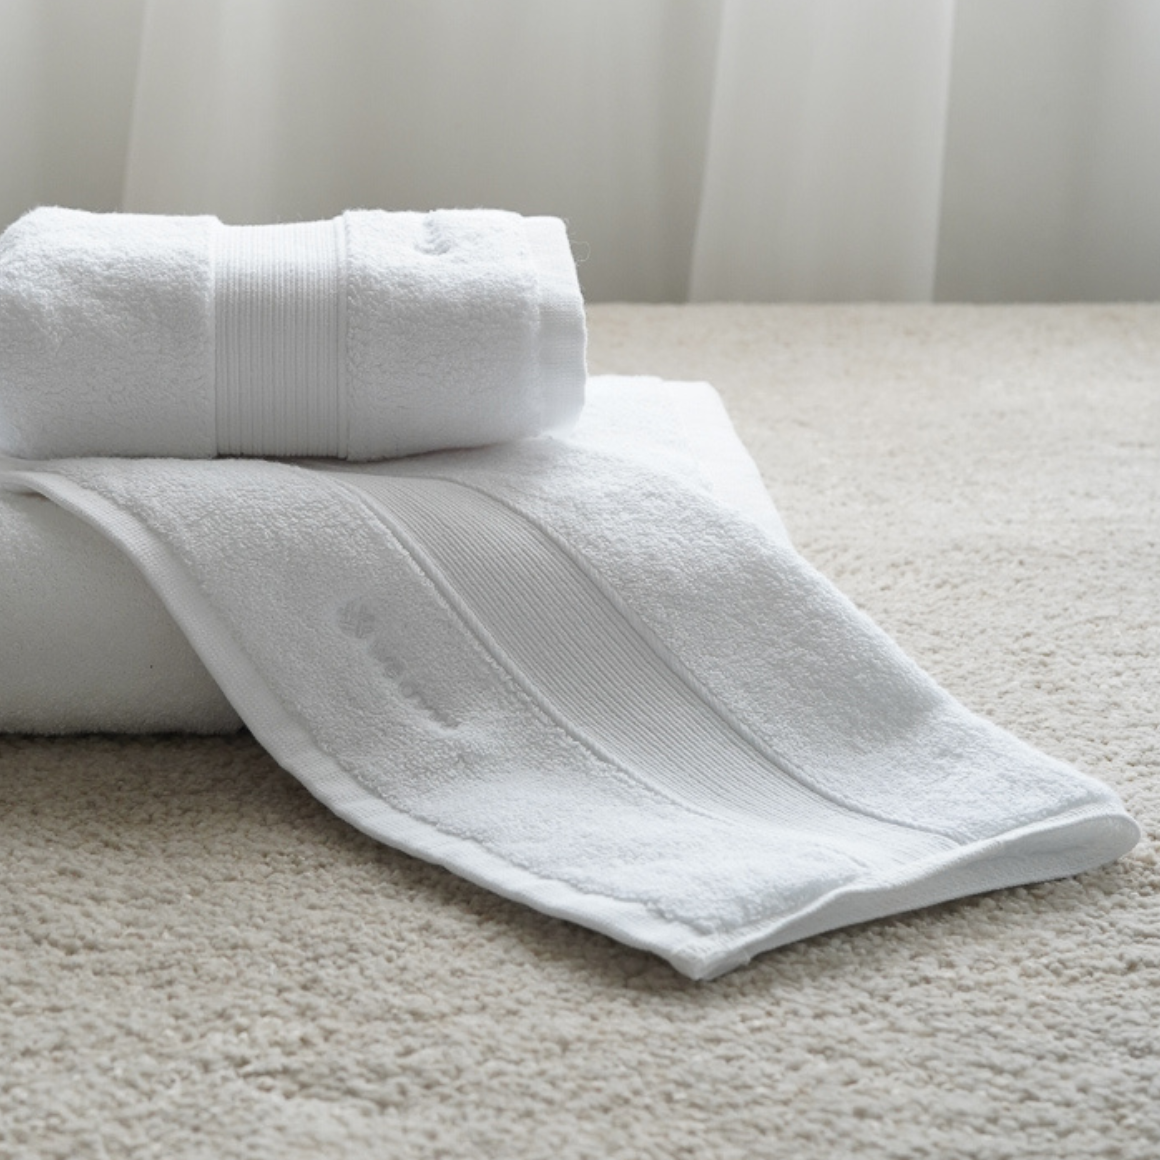 Ultra Soft Cotton Face Towel - Set of 2